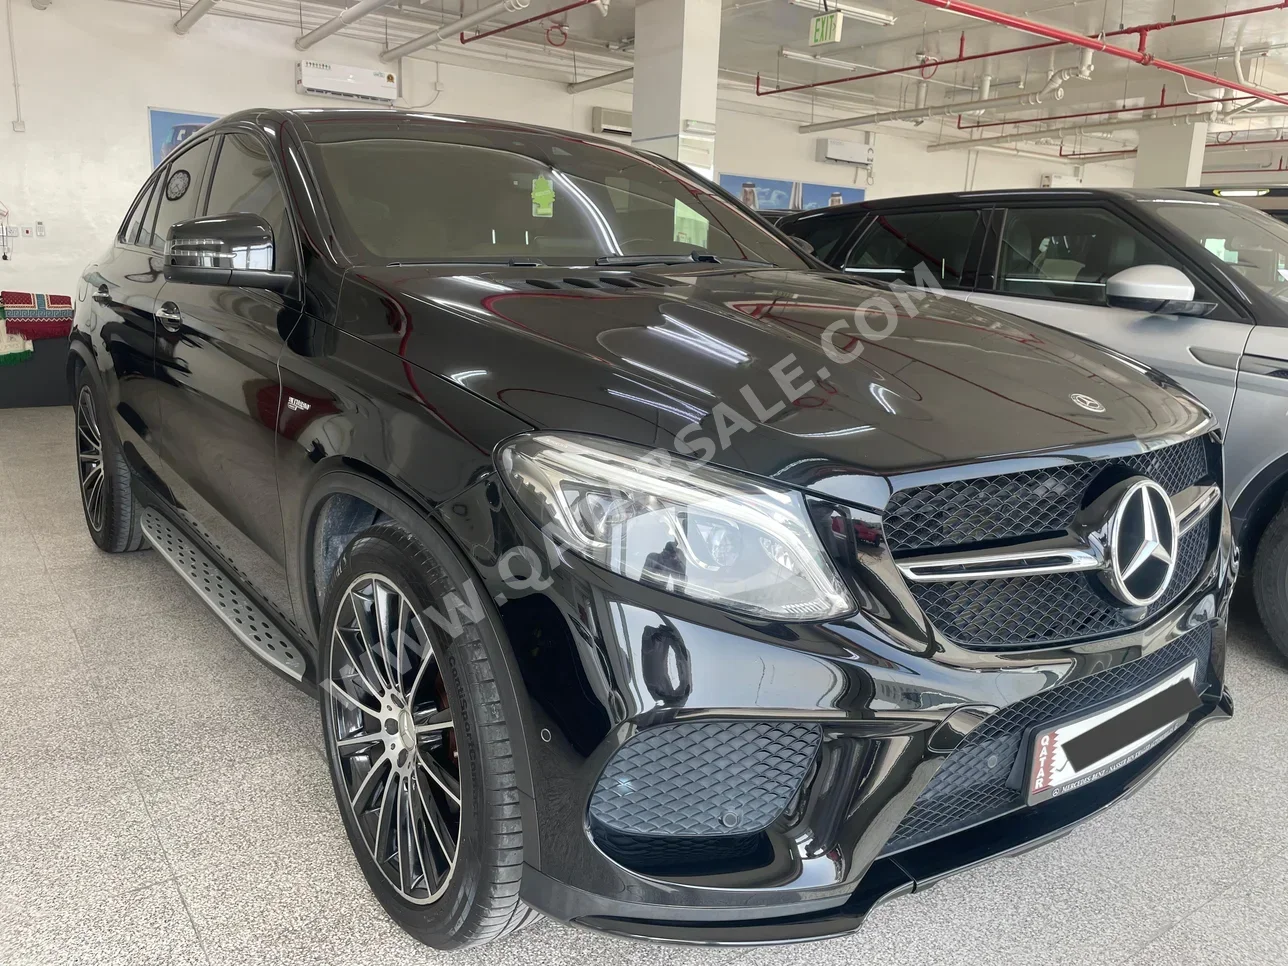 Mercedes-Benz  GLE  43 AMG  2018  Automatic  95,000 Km  8 Cylinder  Four Wheel Drive (4WD)  SUV  Black